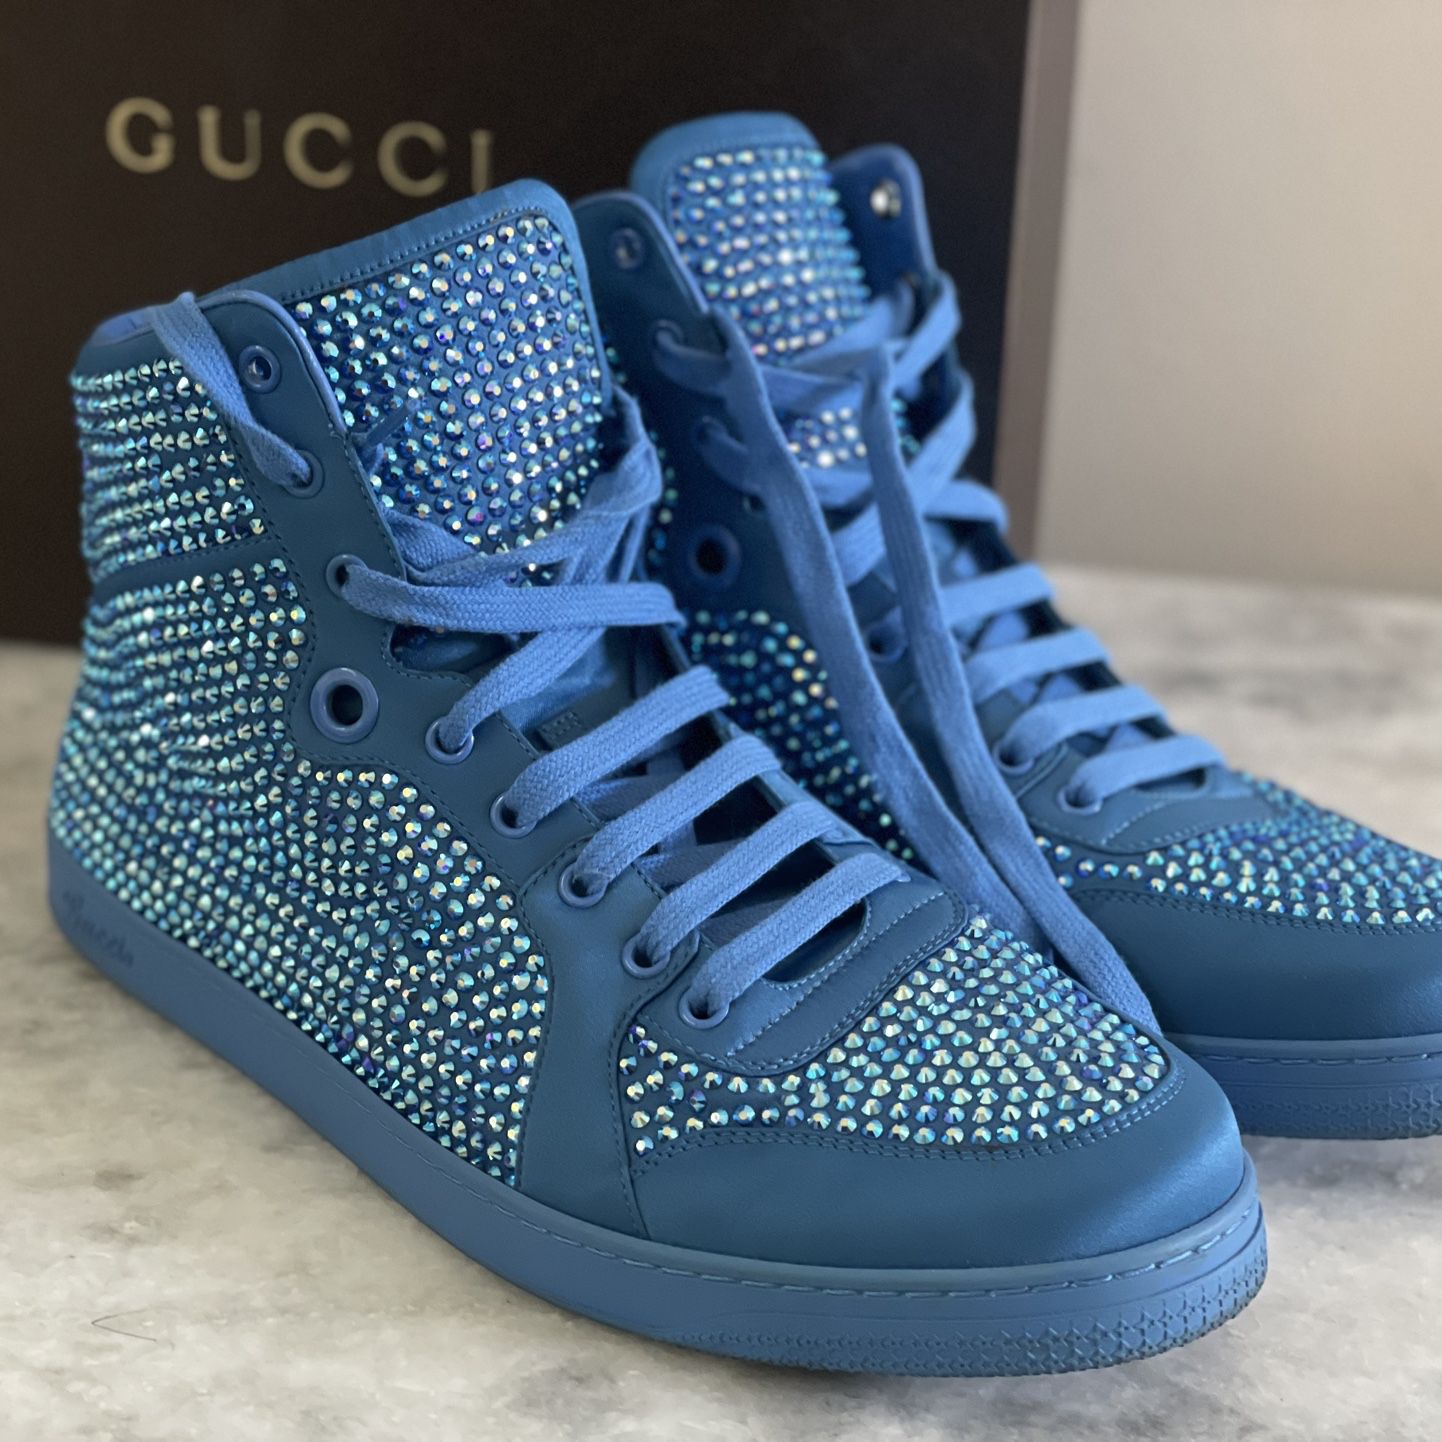 gucci Archives - Derivation Customs - Custom sneakers Swarovski trainers